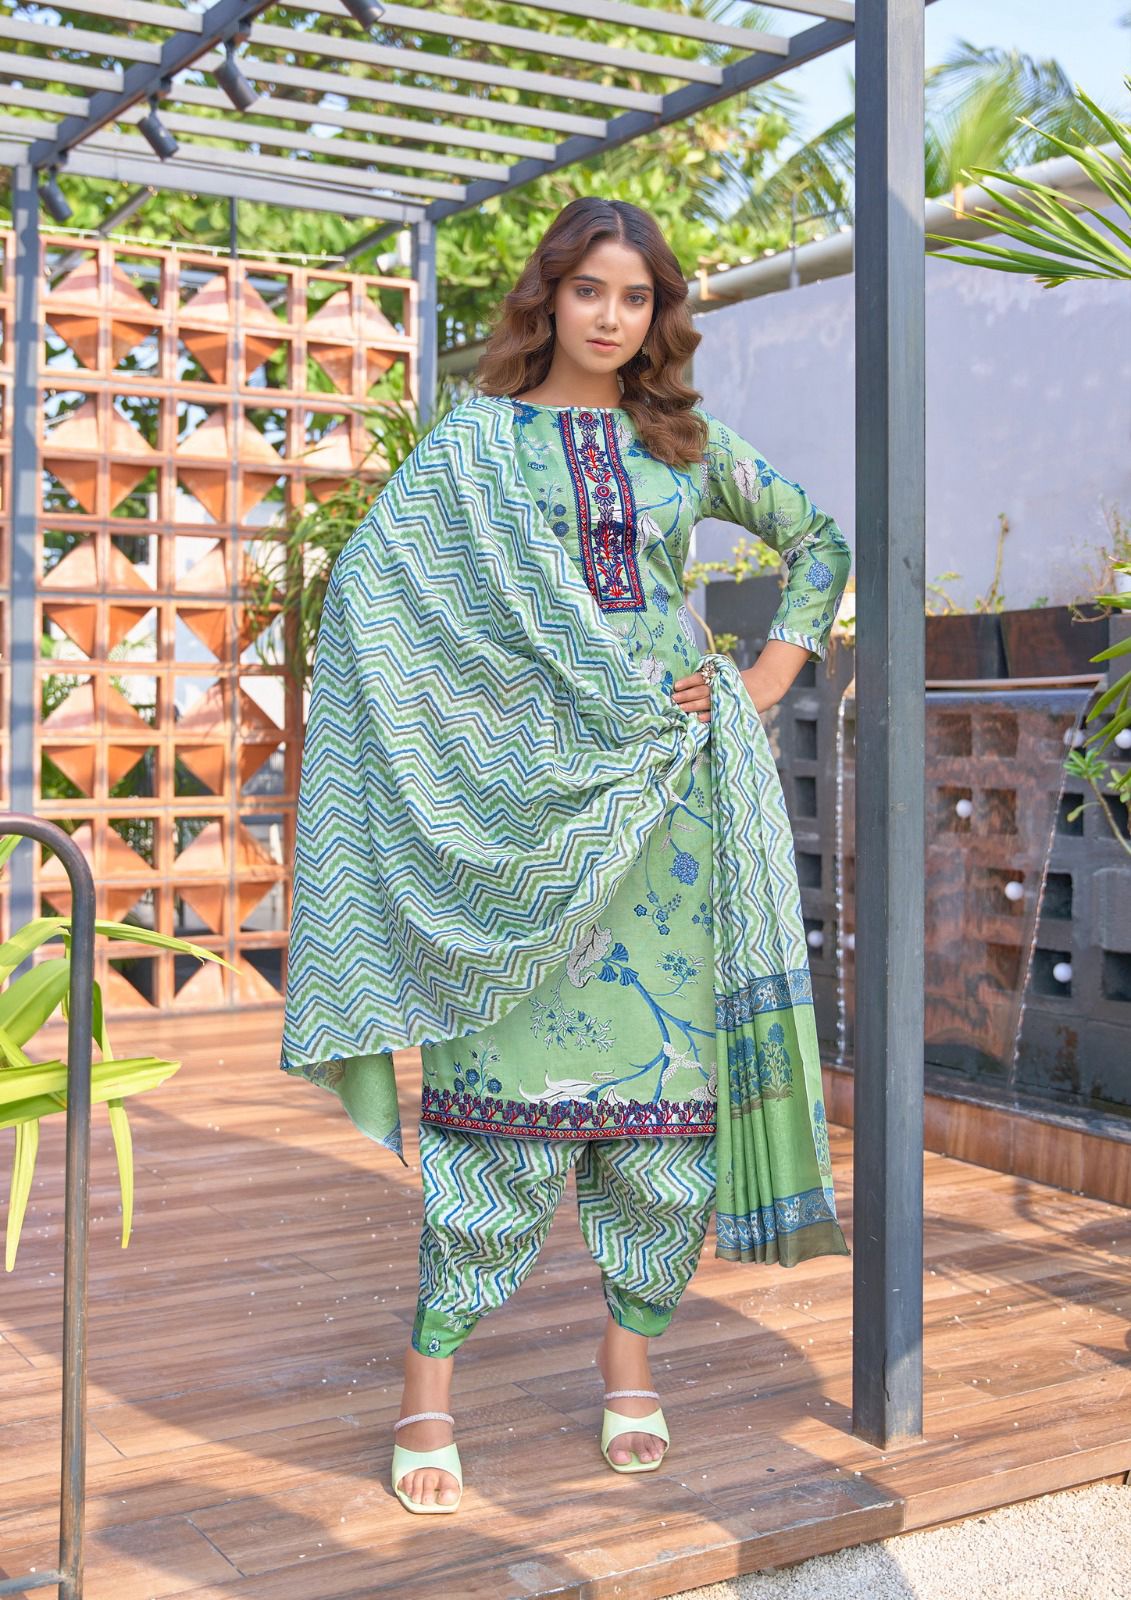 Guzarish Yashika Trends Cotton Salwar Suits